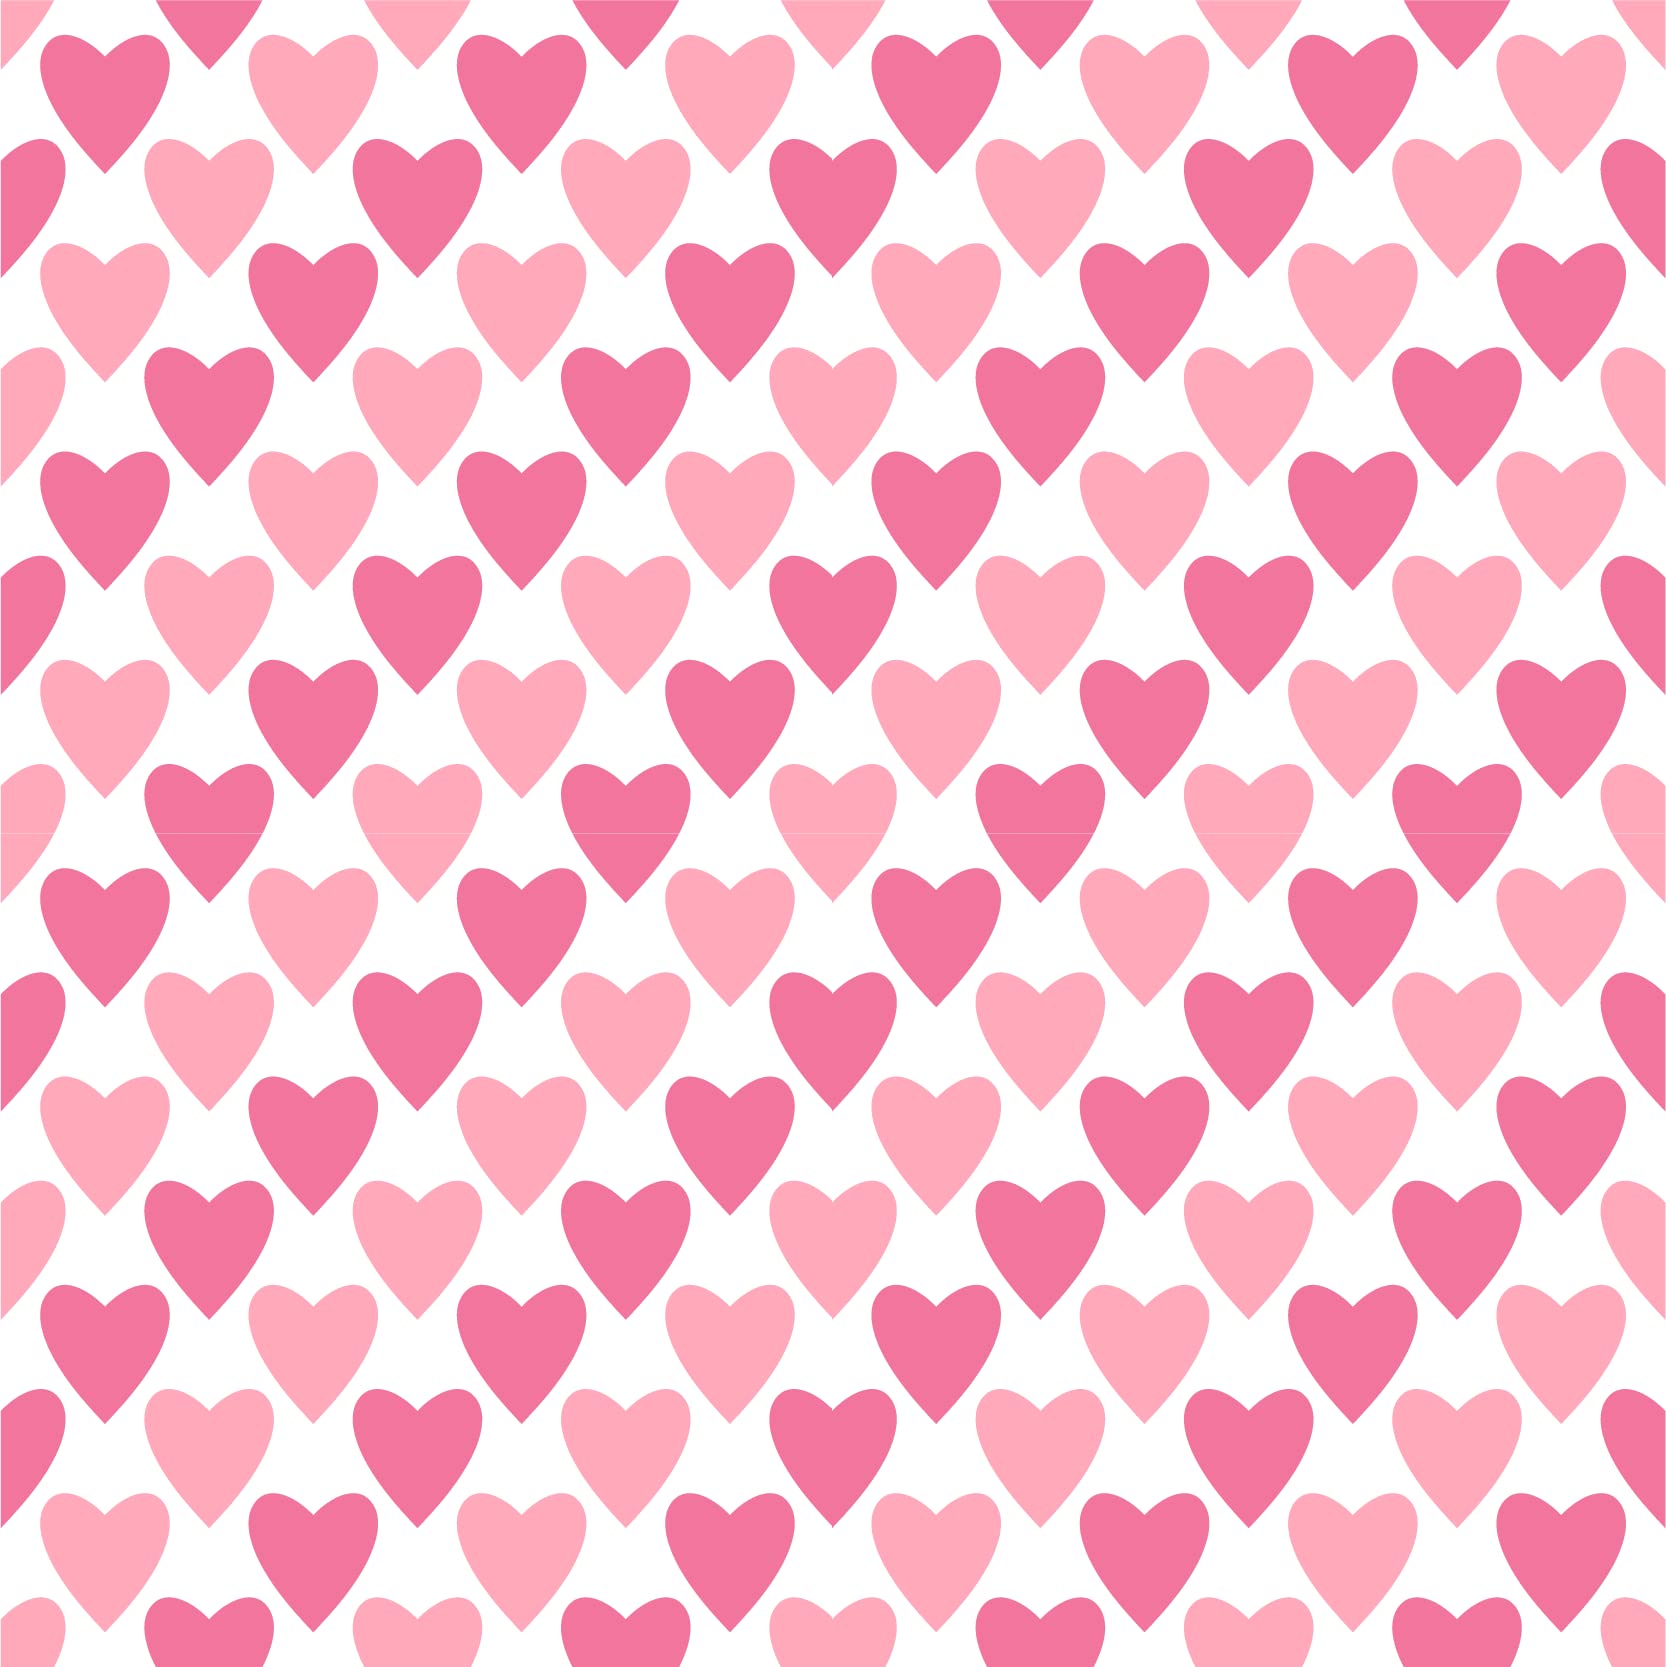 Valentines Day Pattern Vinyl Permanent Adhesive Craft Vinyl Pink Heart Patterns 12 x 12 (2, 25F)